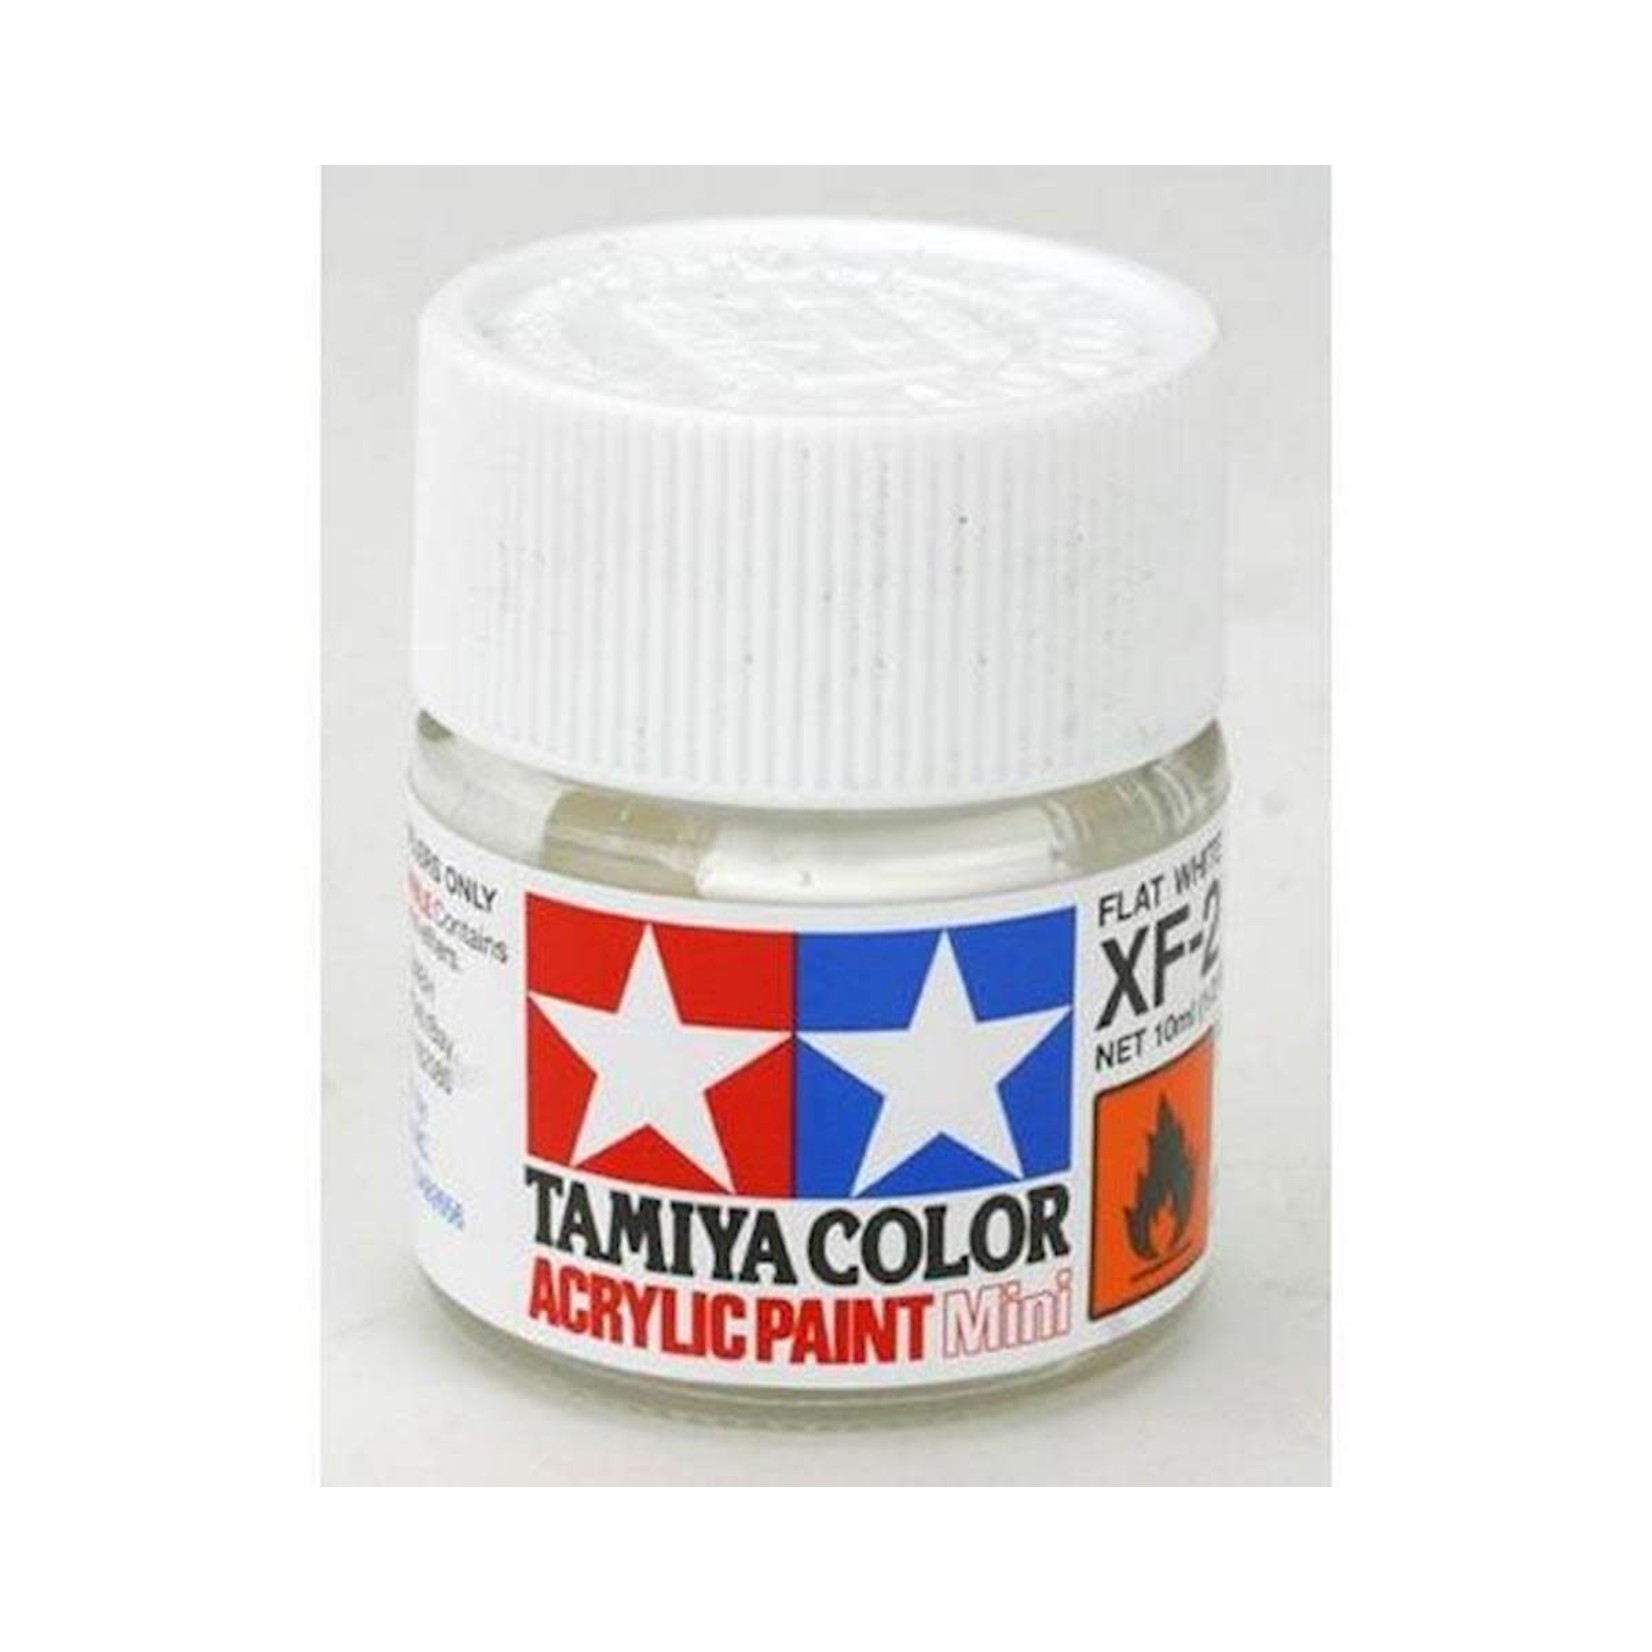 Tamiya Tamiya XF-2 Flat White Acrylic Paint (10ml) #81702